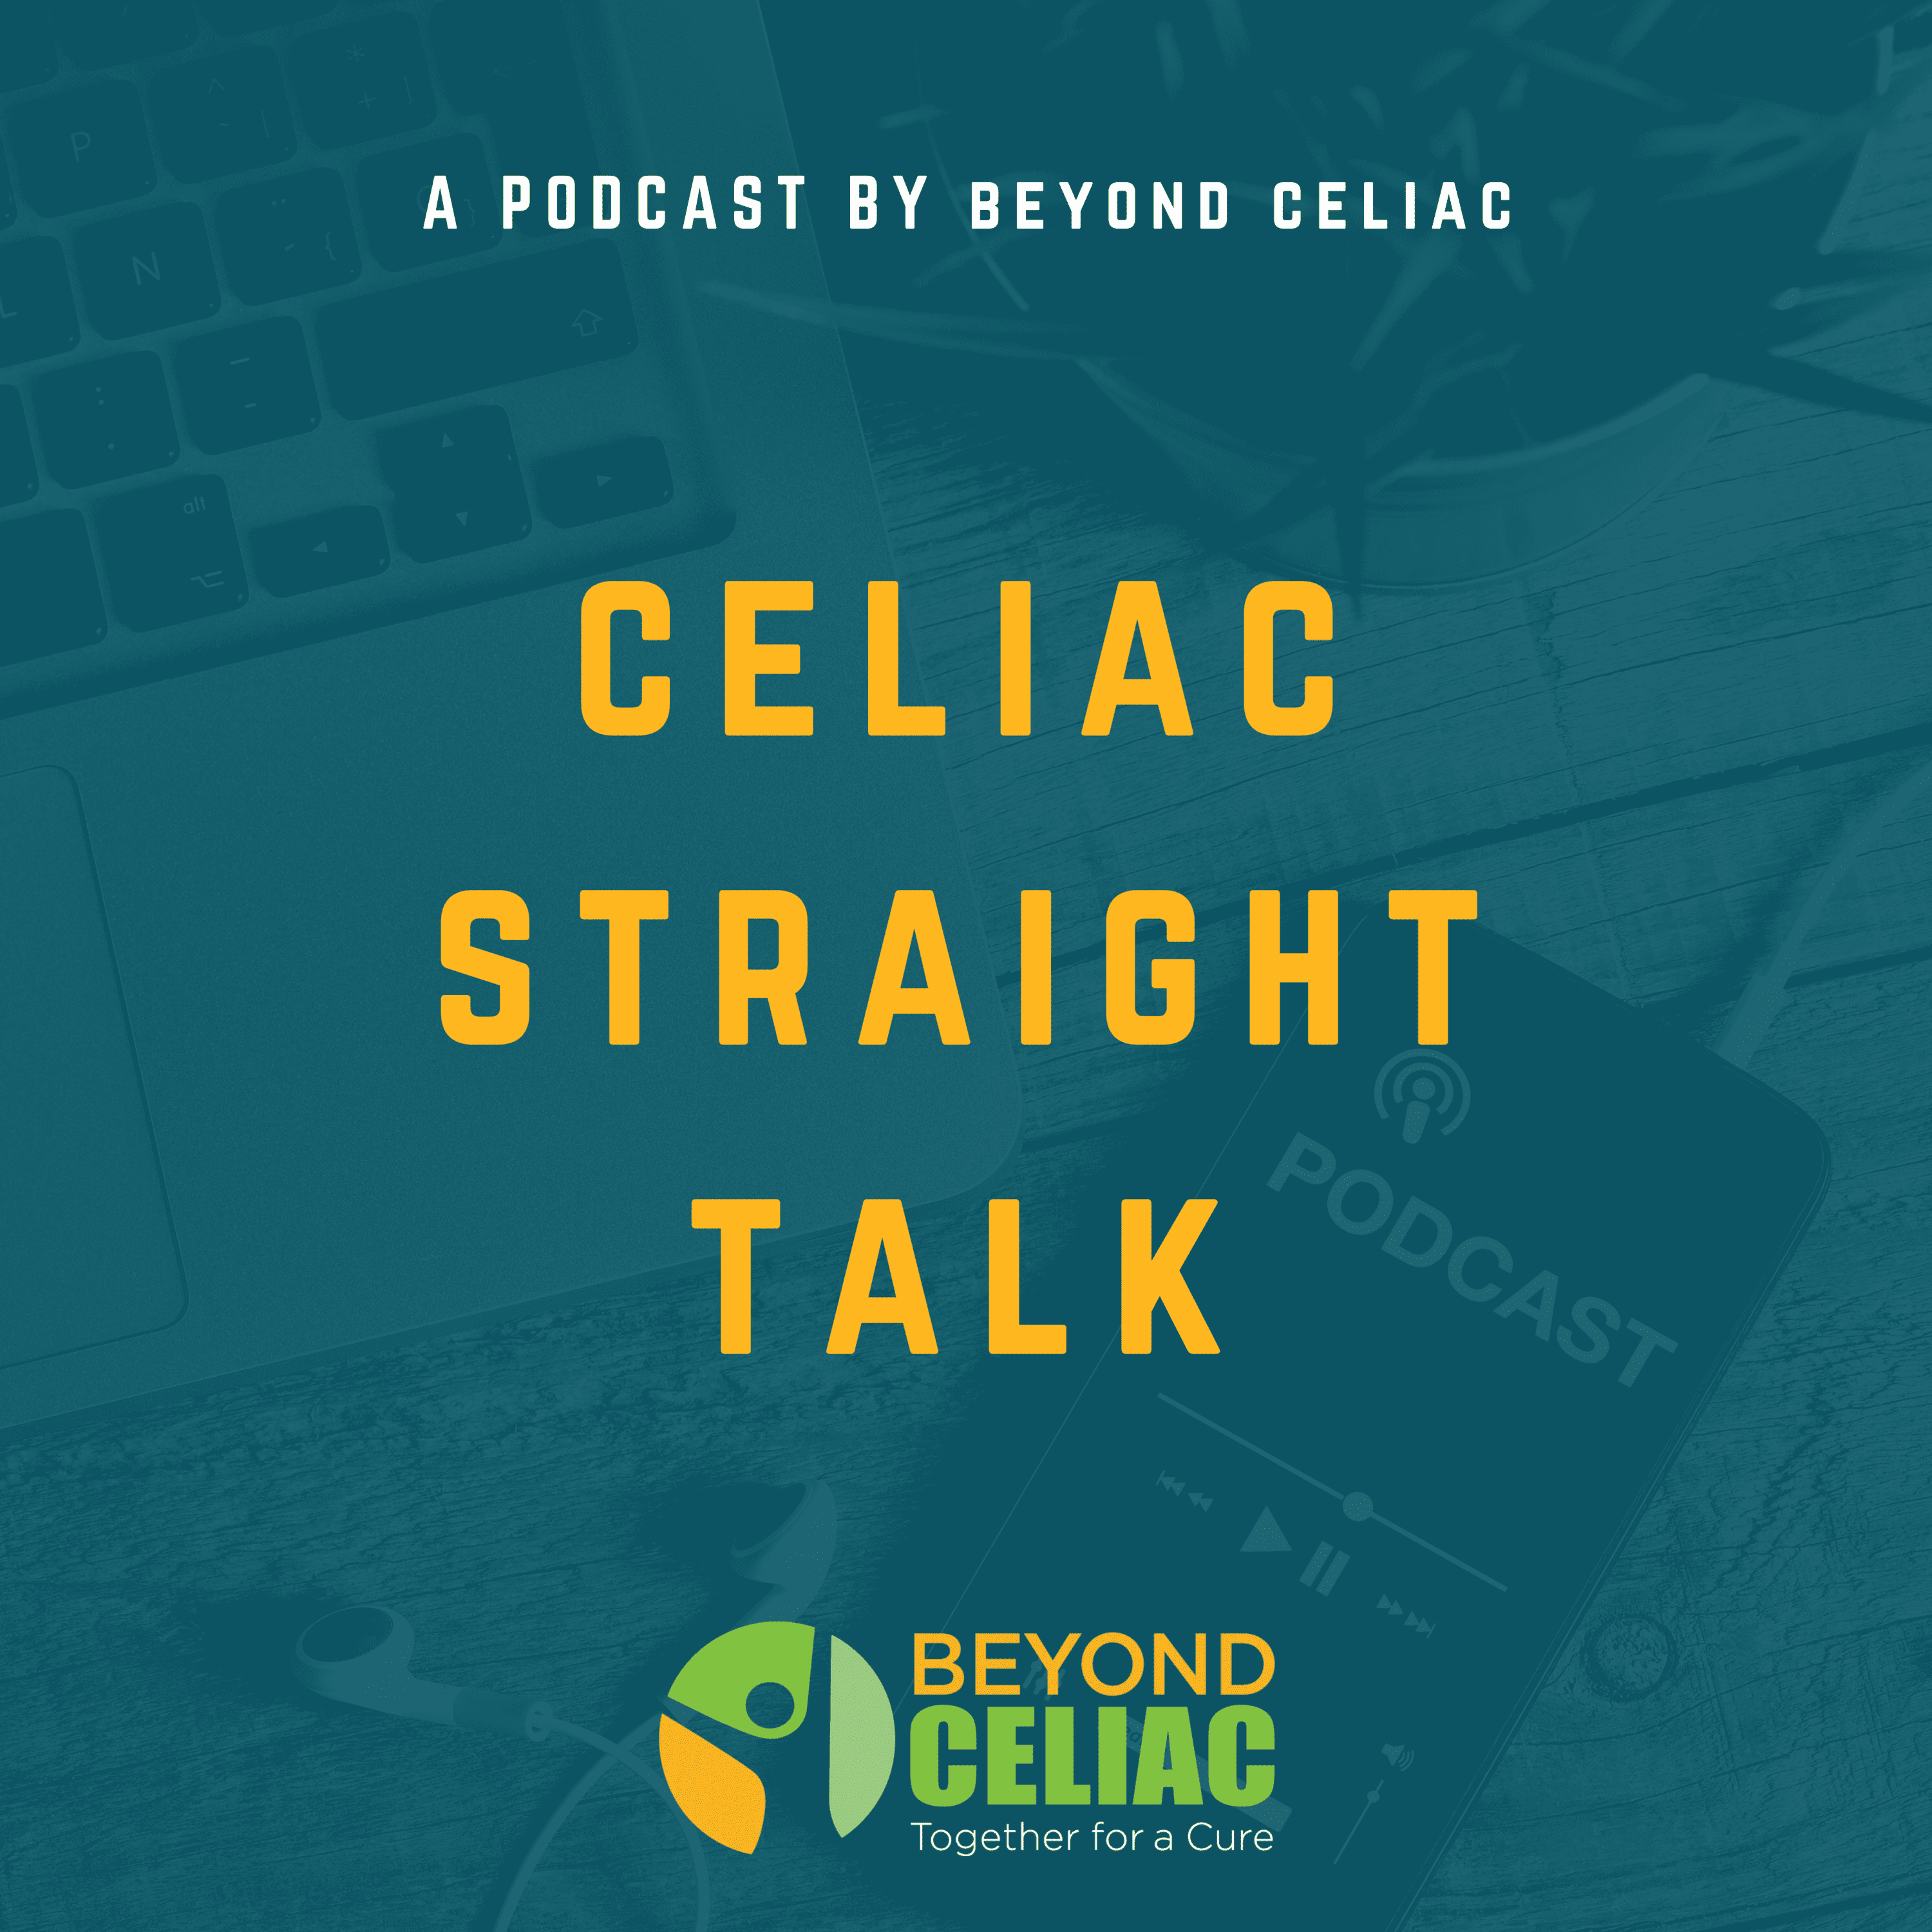 Celiac Straight Talk: The Podcast